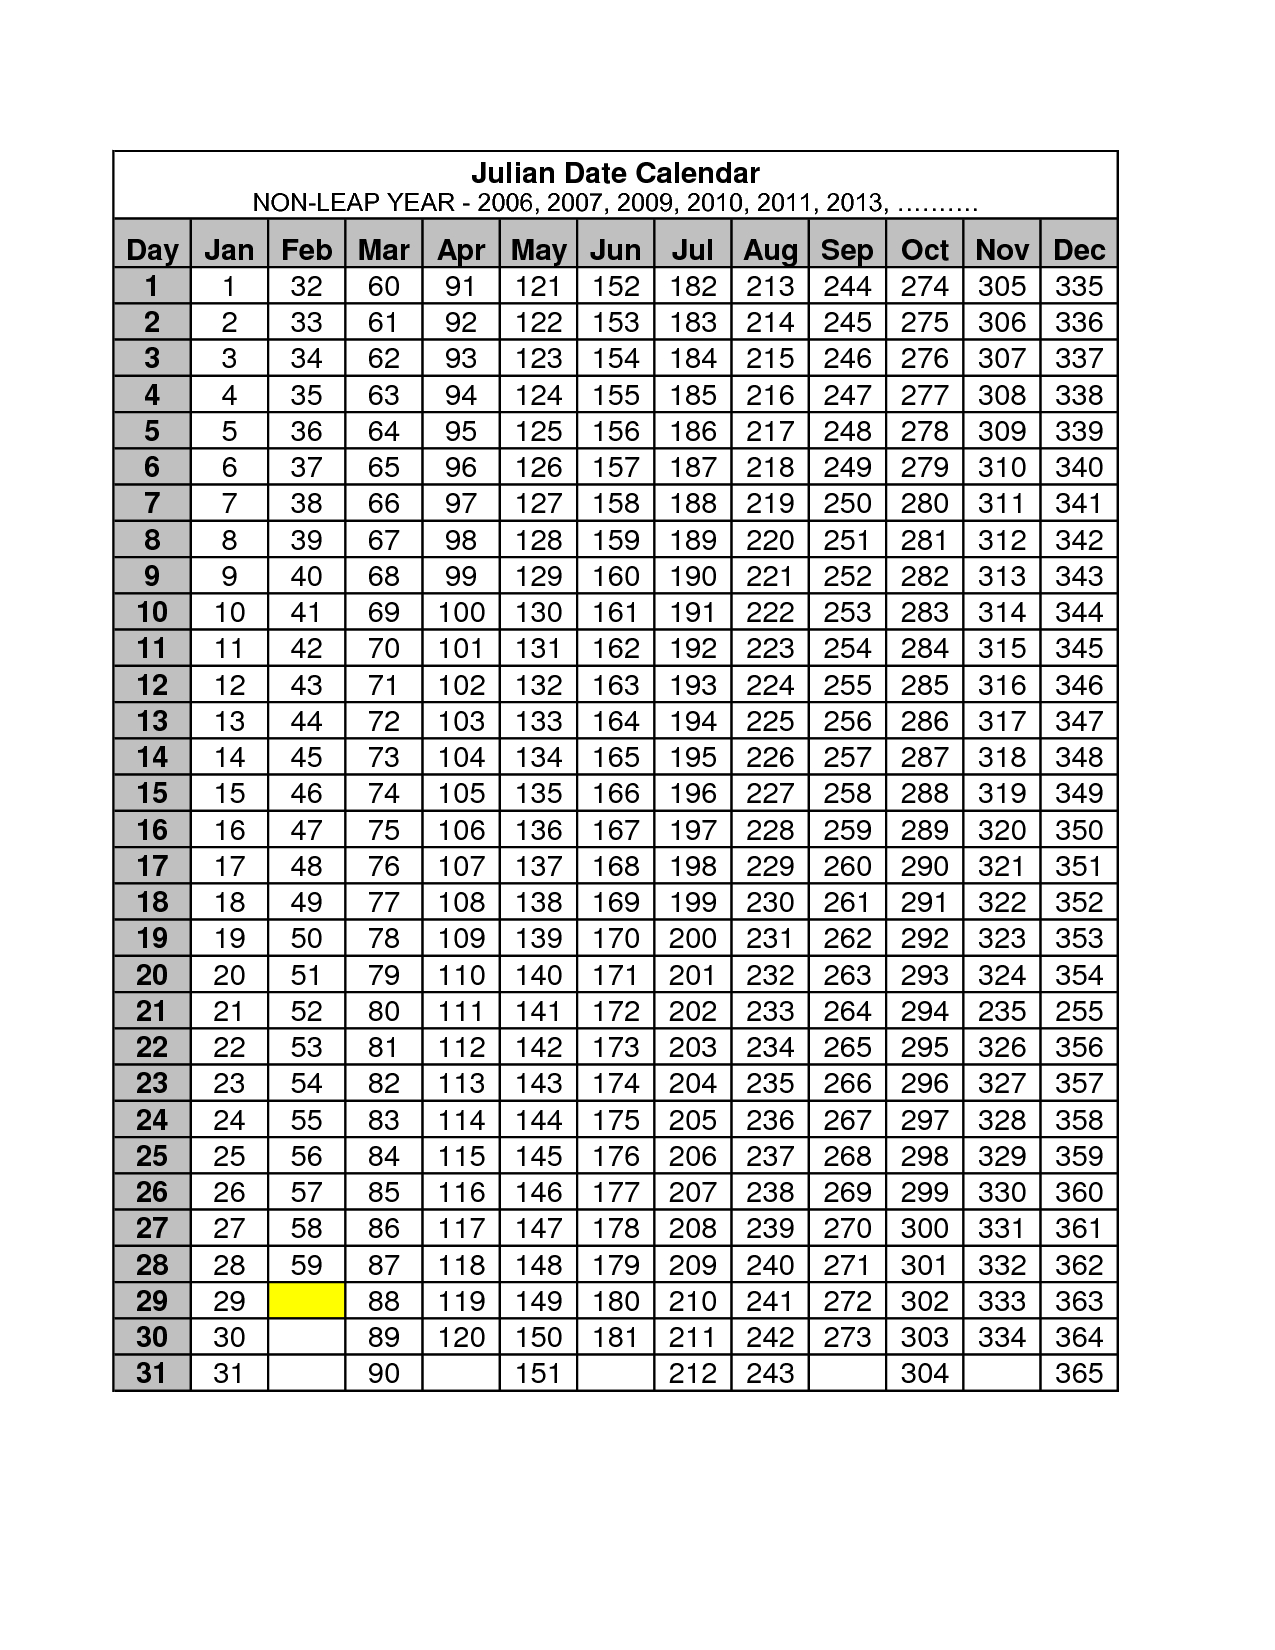 2013 Julian Date Calendar Quadax | Calendar Blank For May 2015 throughout Calendario Juliano 2020 Quadax